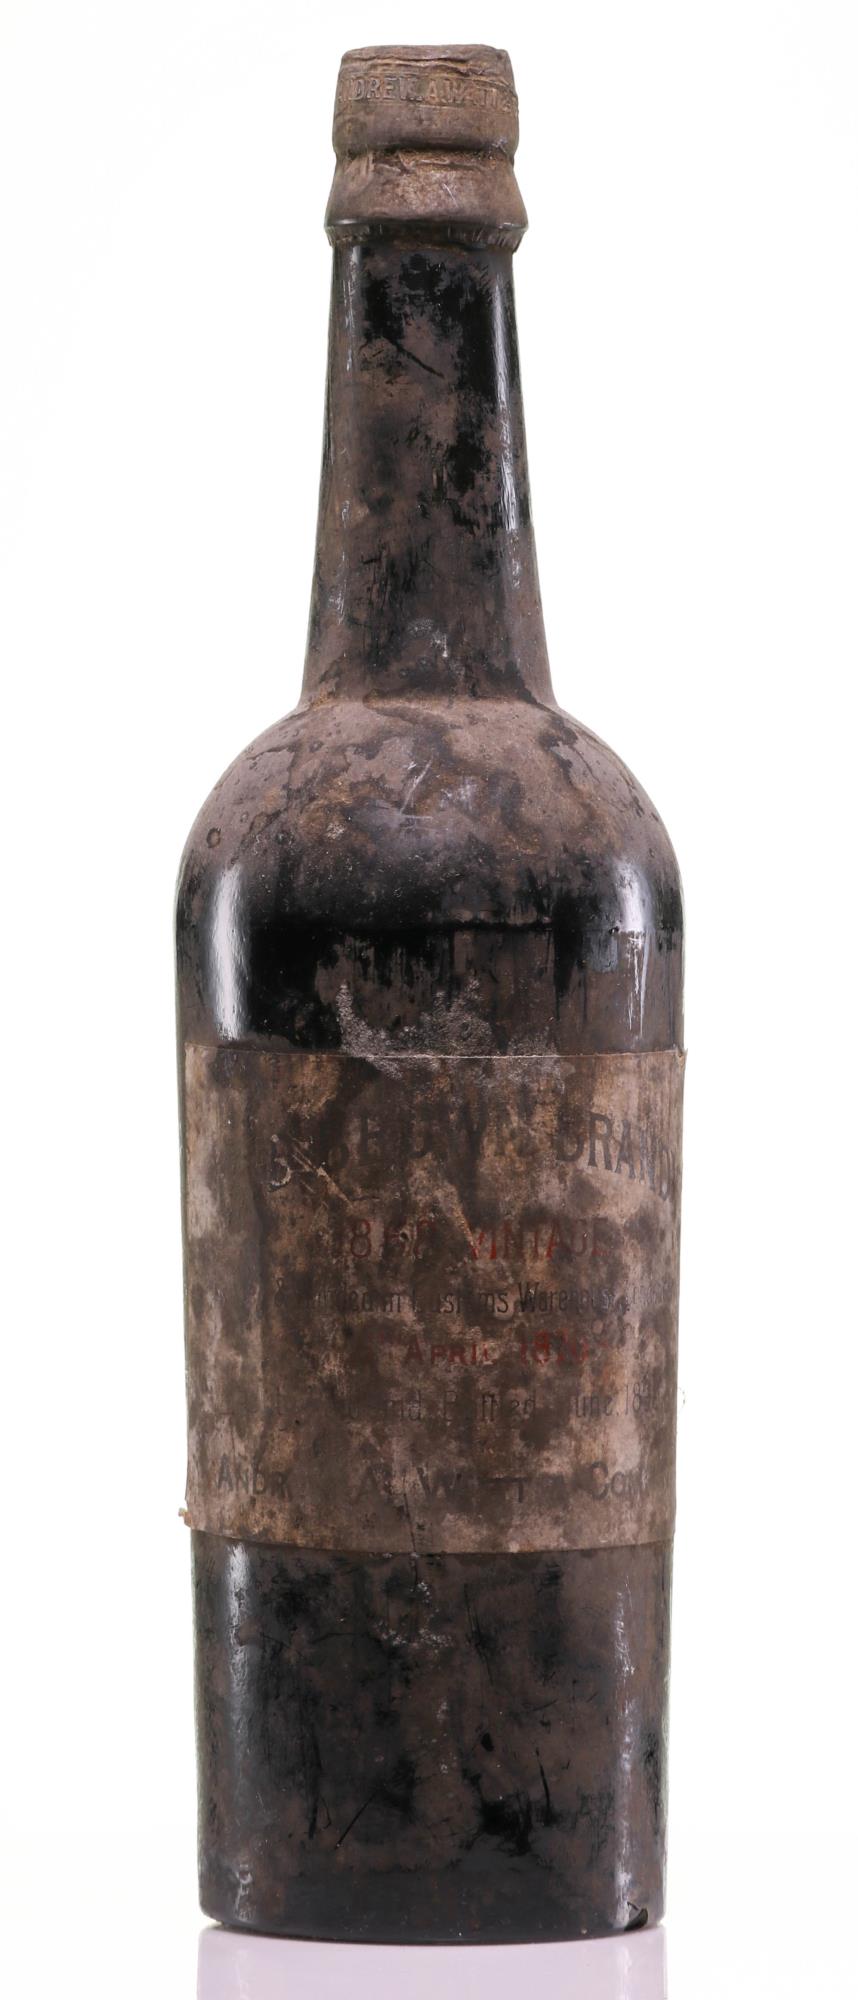 Andrew A. Watt & Co. 1868 Vintage Cognac - Rue Pinard